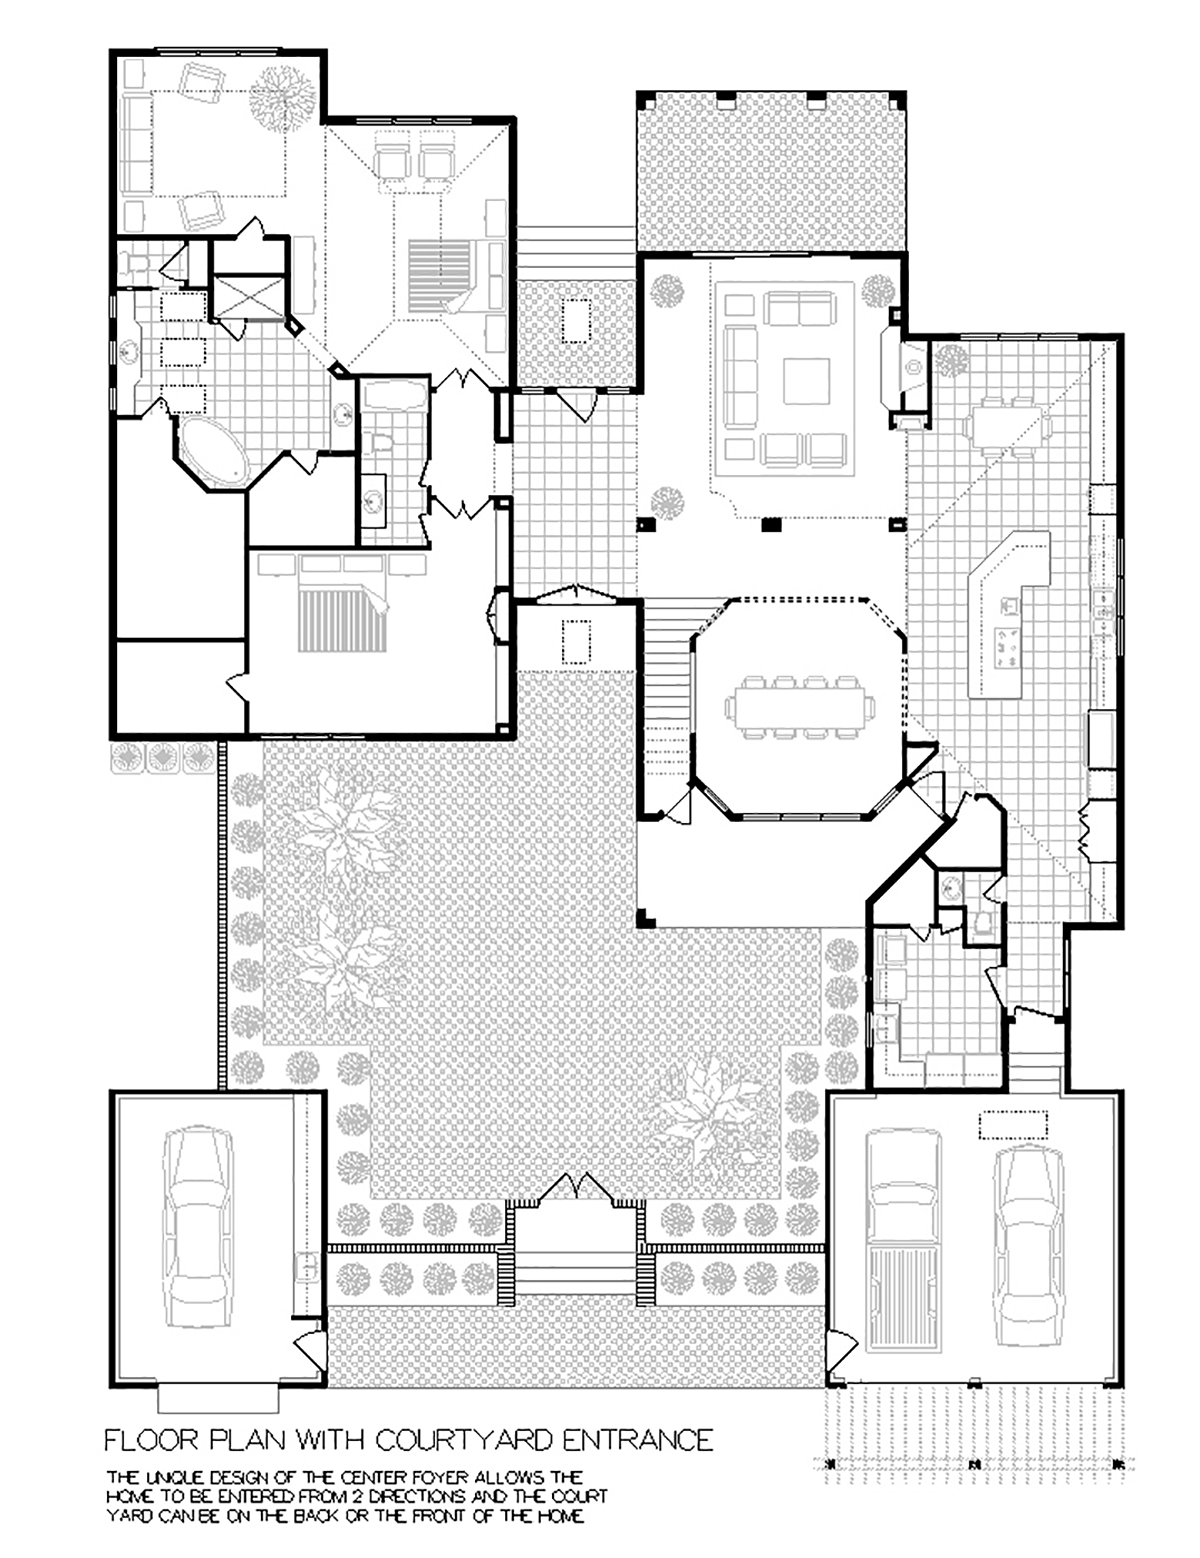 House Plan 76954 Alternate Level One